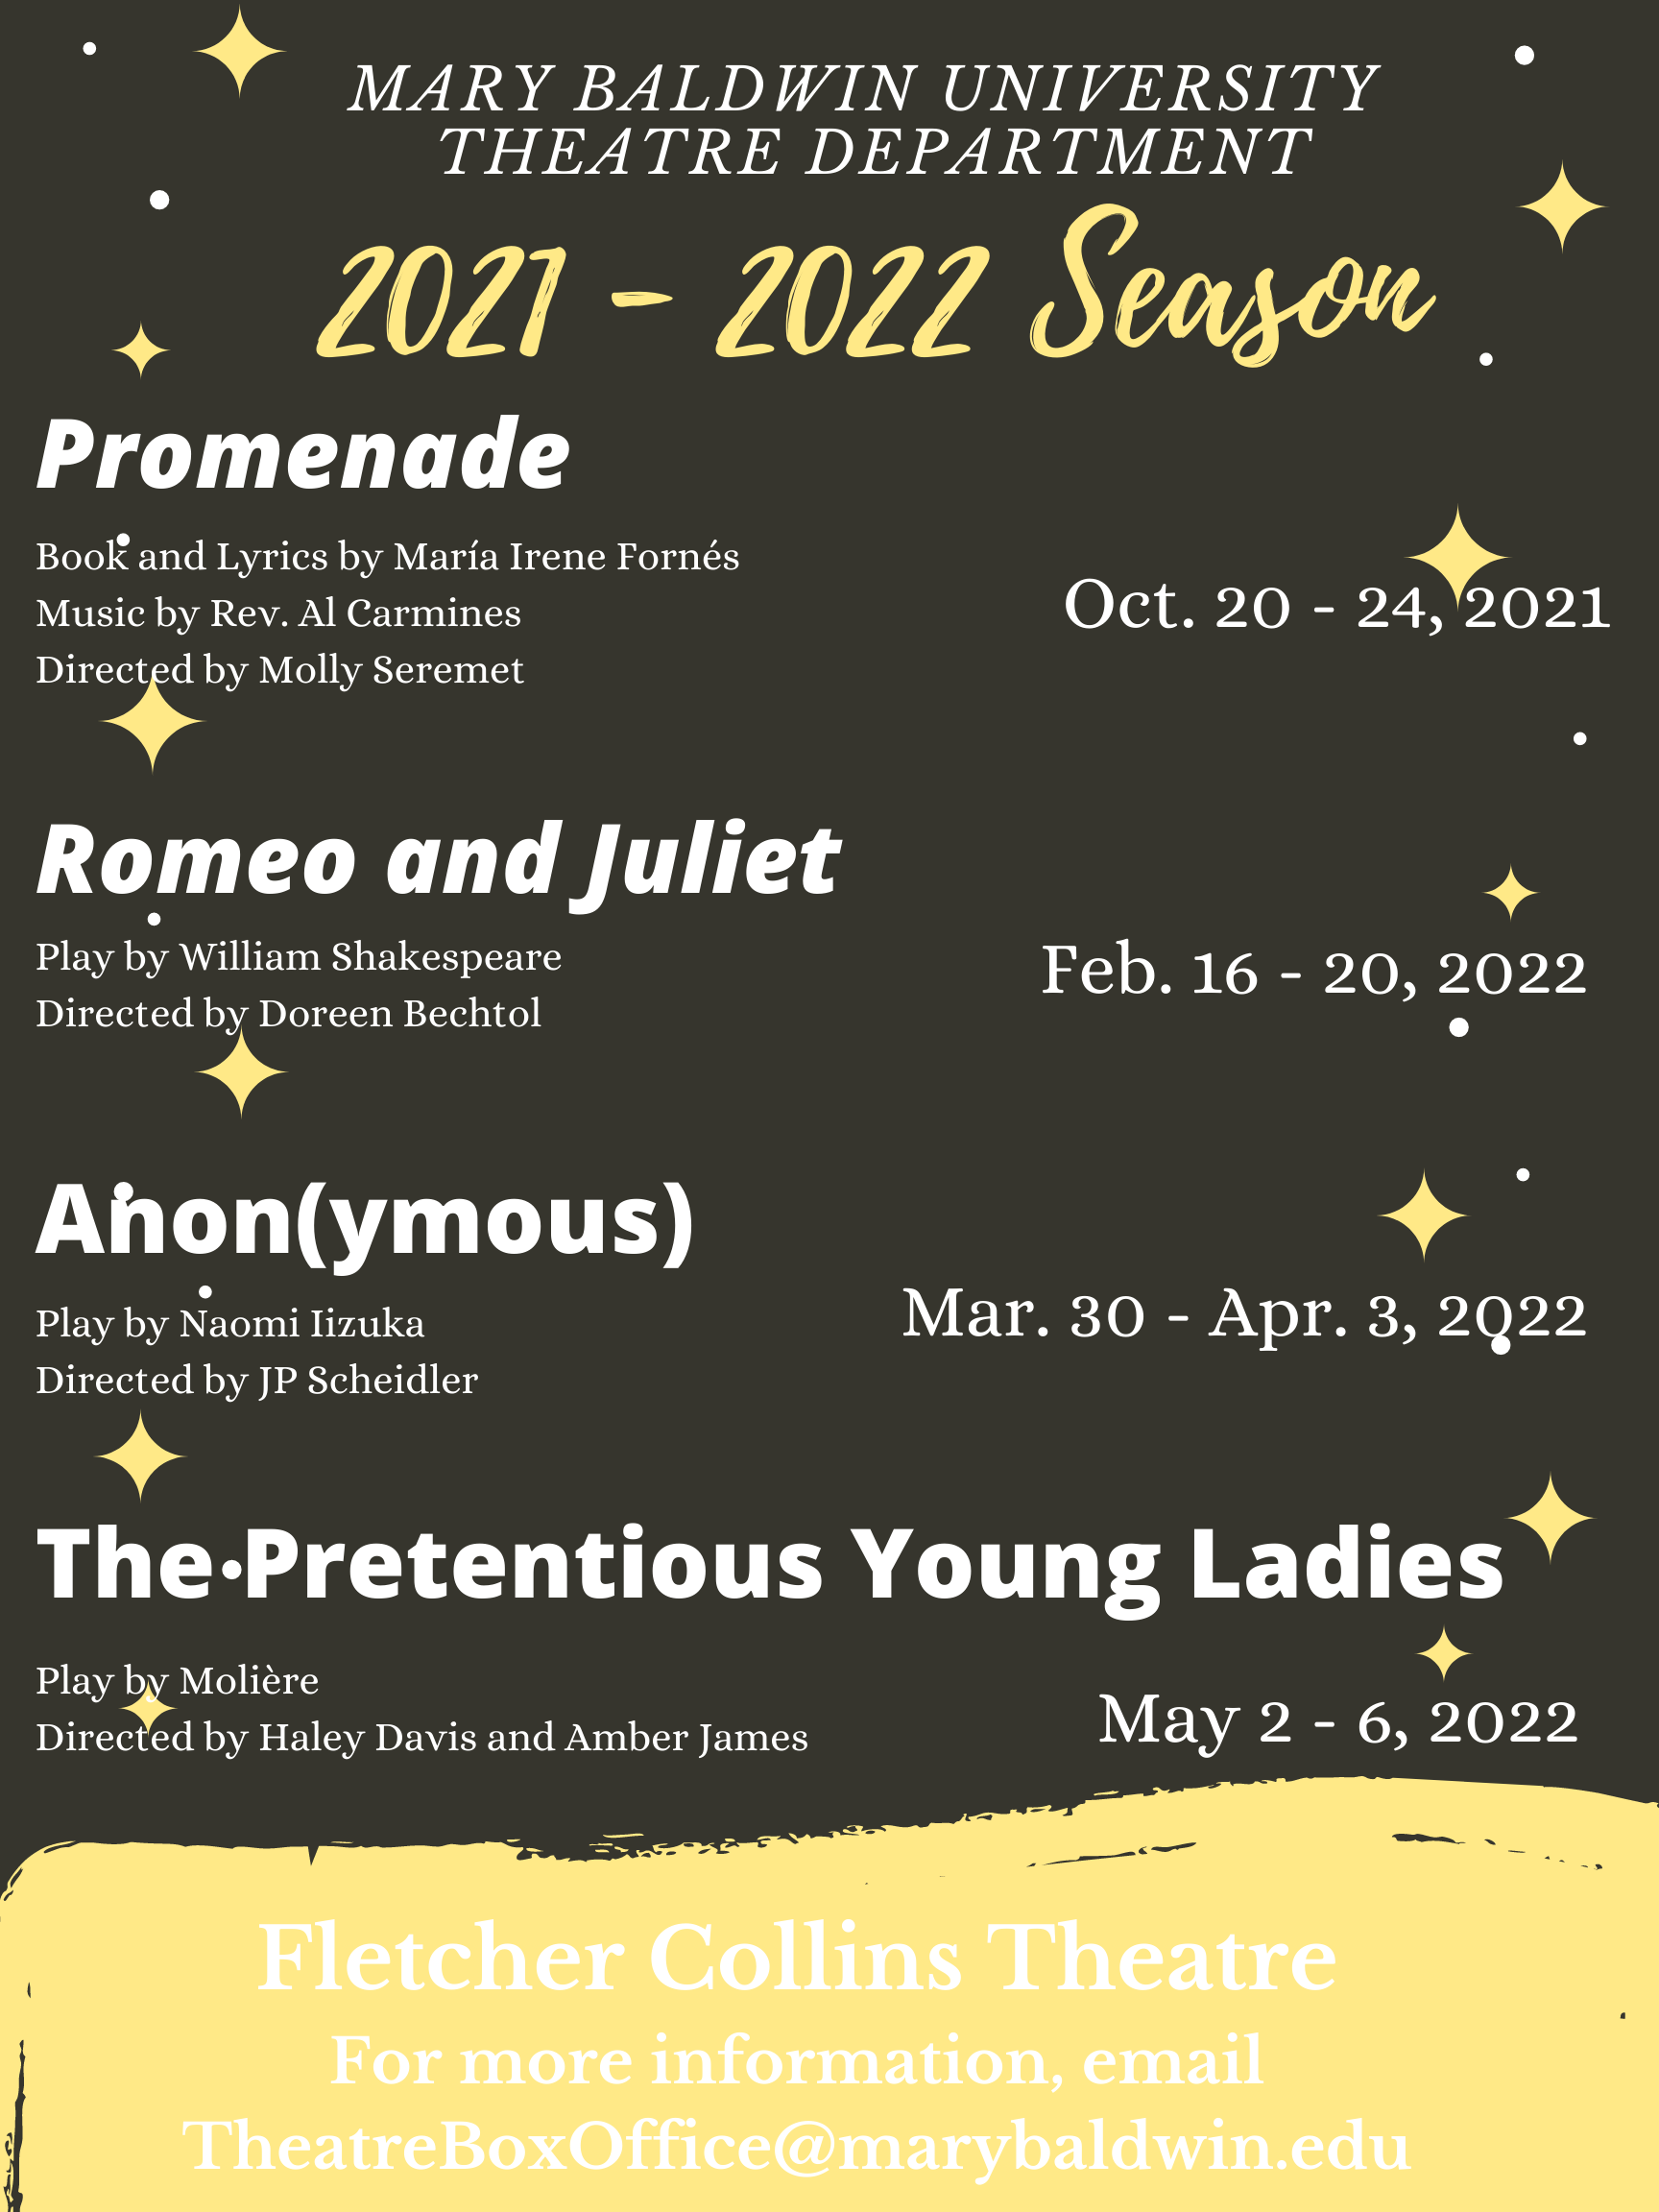 Undergrad Theatre Program Launches 2021-22 Season